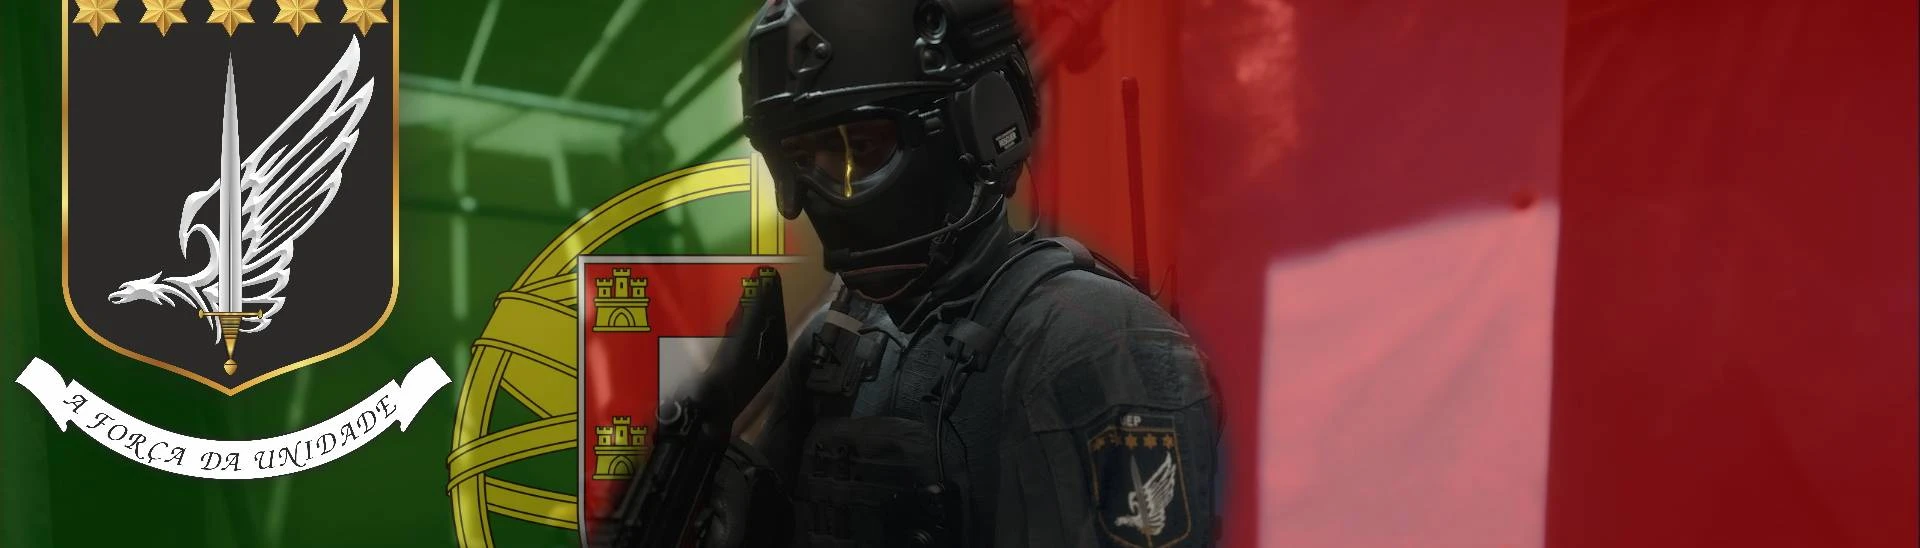 Policia de Segurança Publica (portuguese skin) 